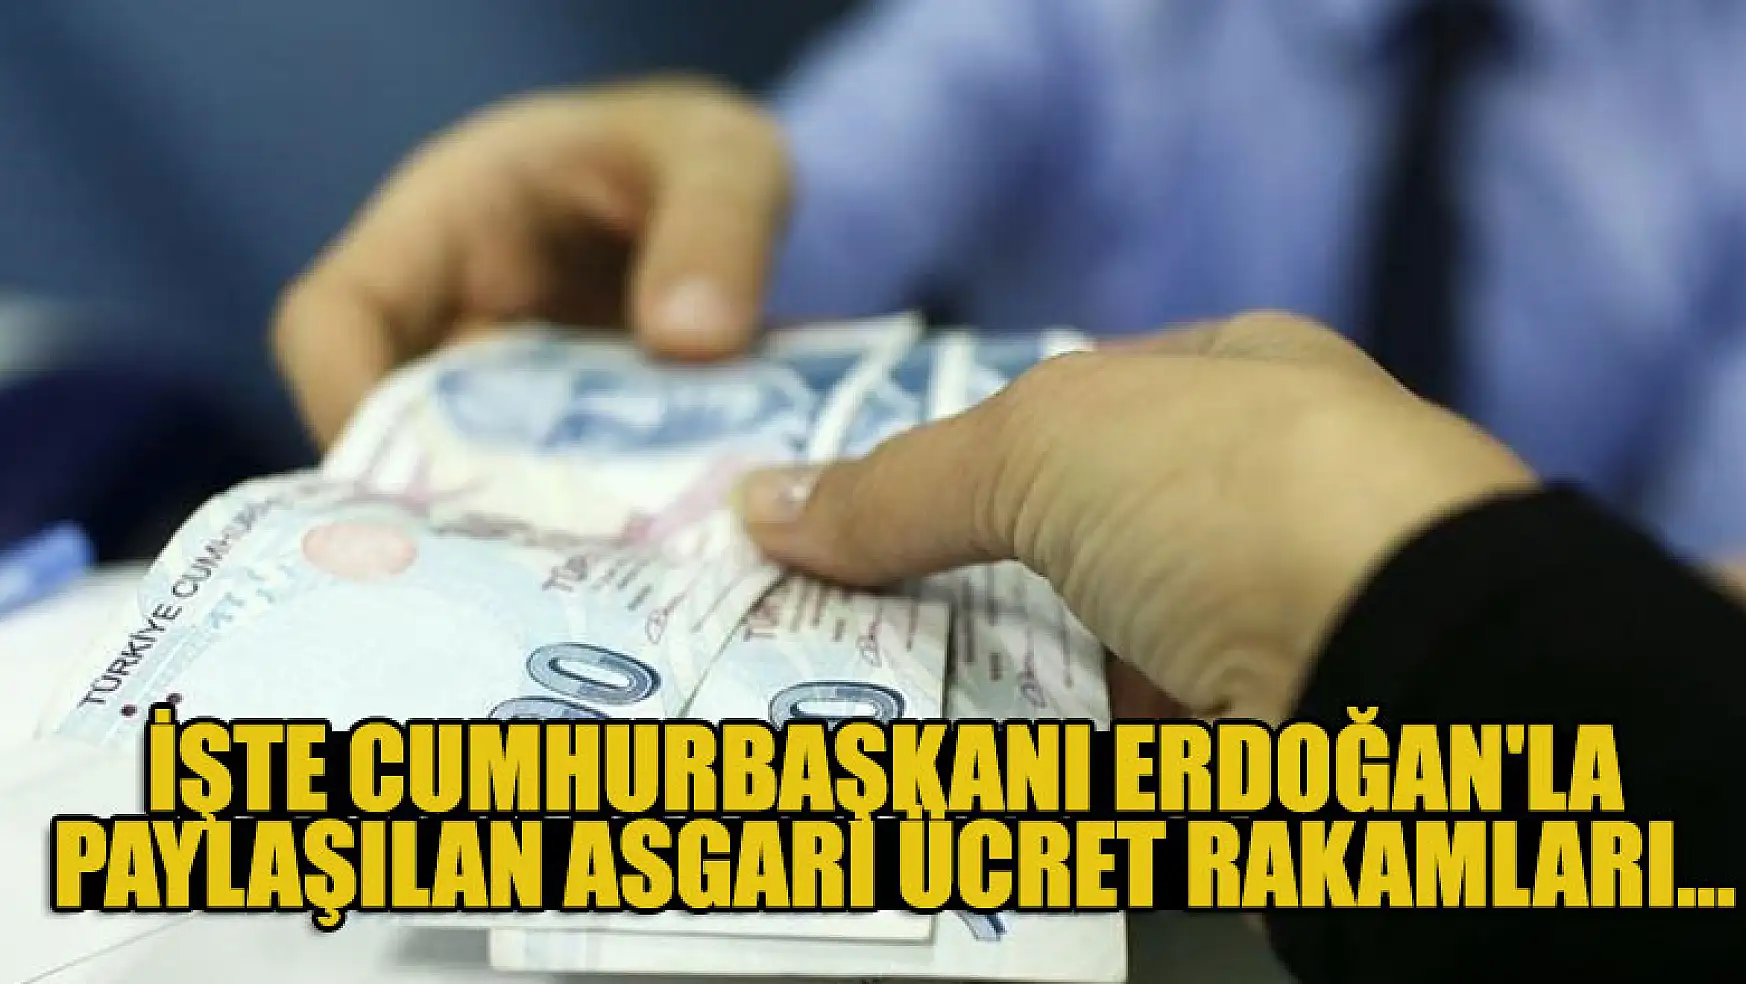 Cumhurbaşkanı Erdoğan'la paylaşılan asgari ücret rakamları...